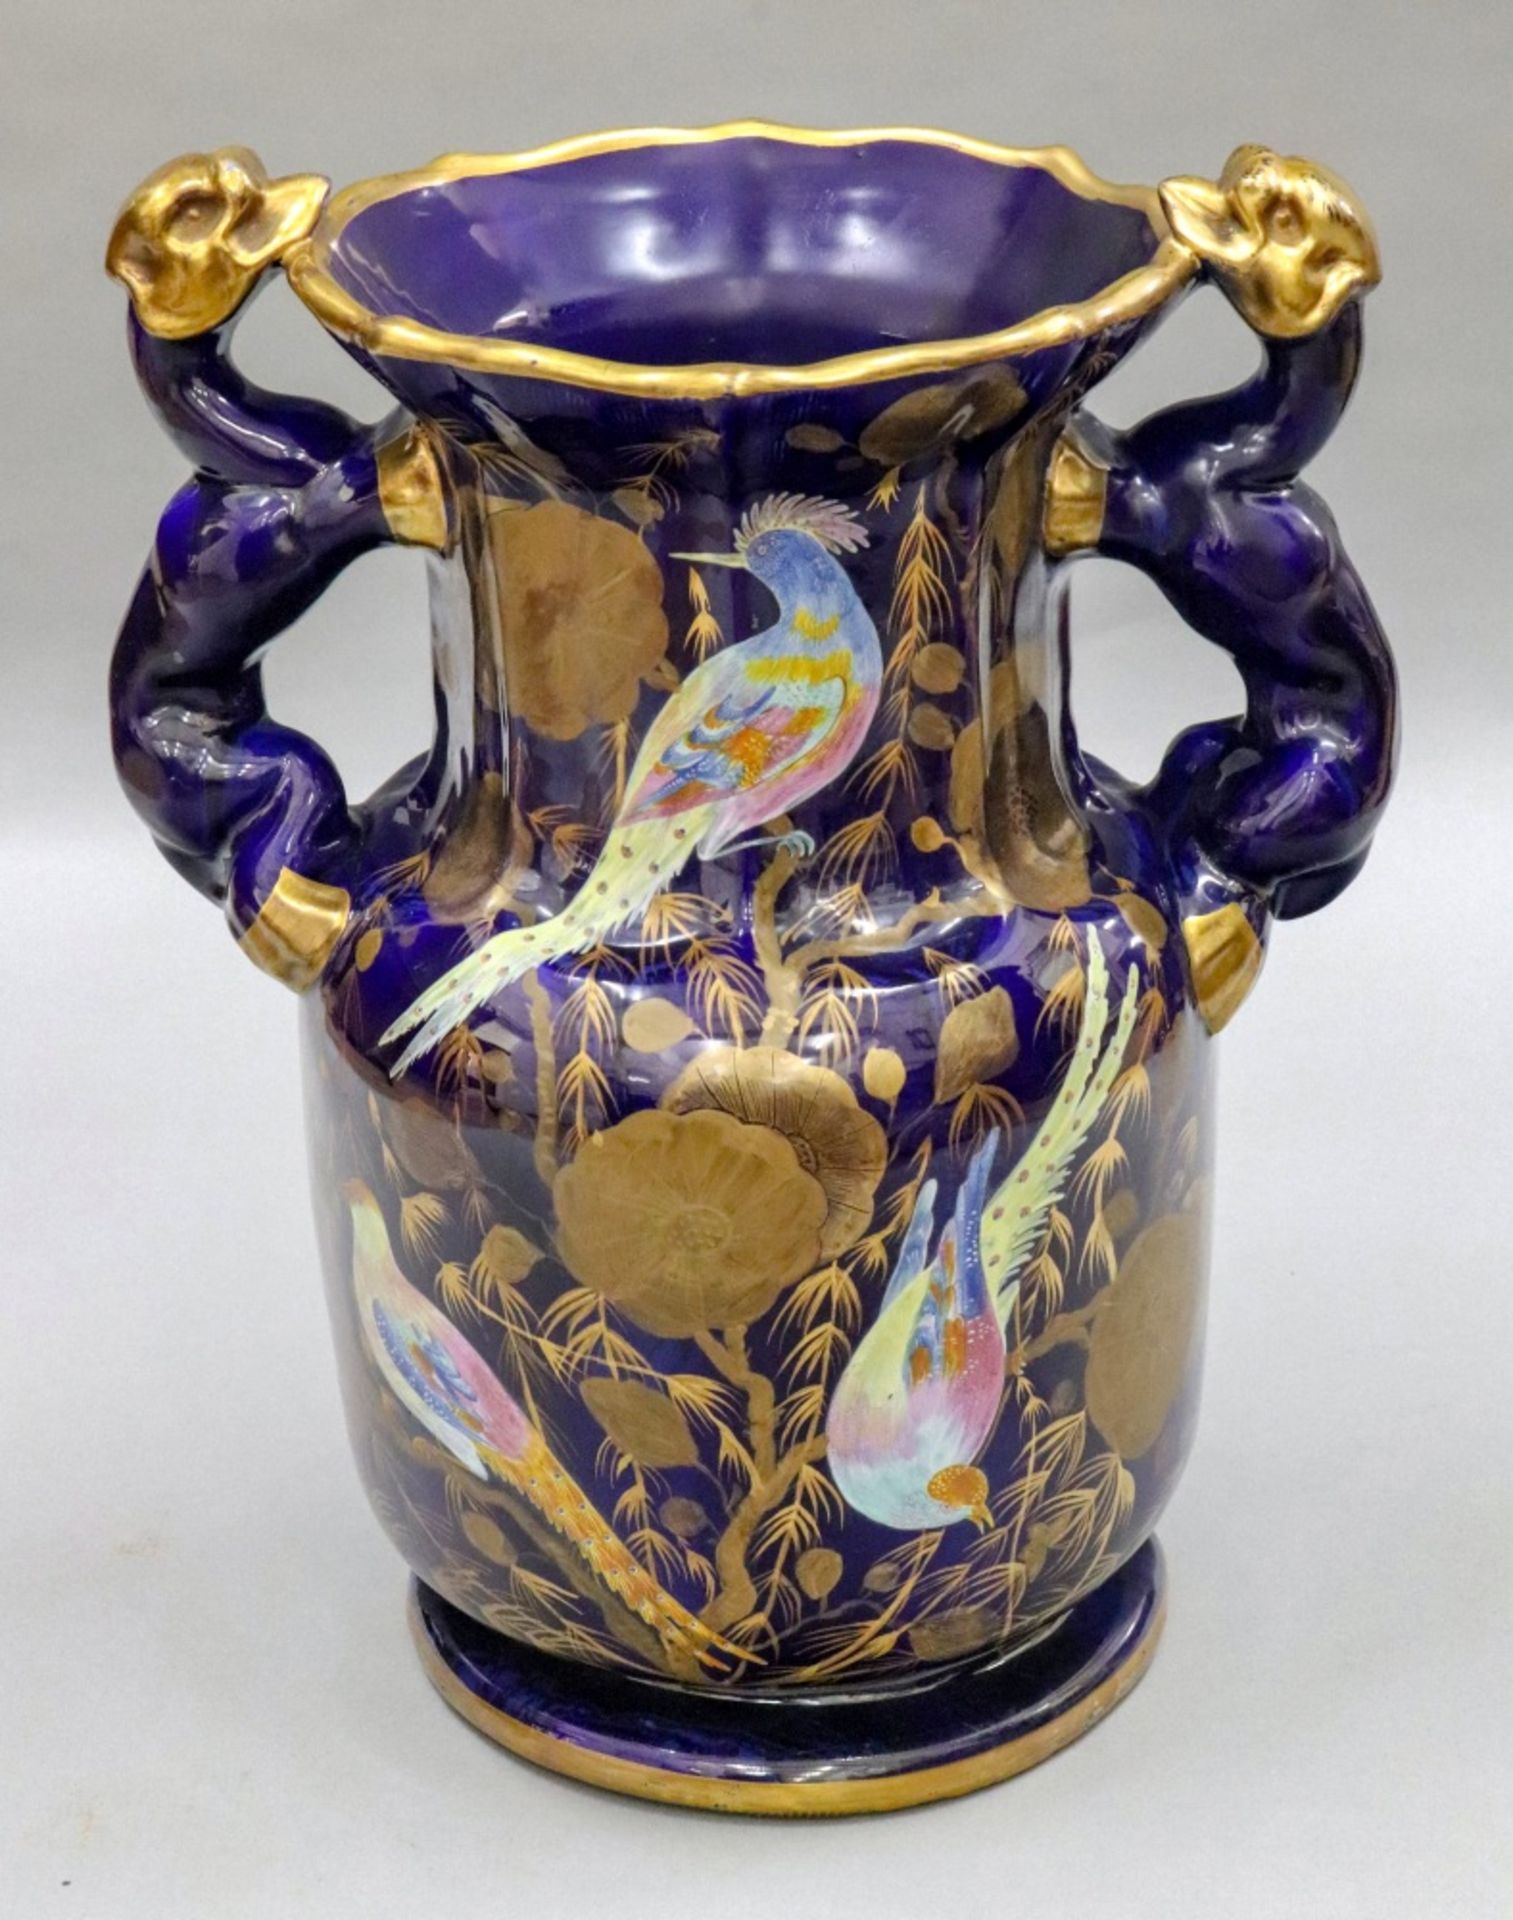 A Masons Ironstone vase, circa 1815 - 20, with twin dragon side handles,